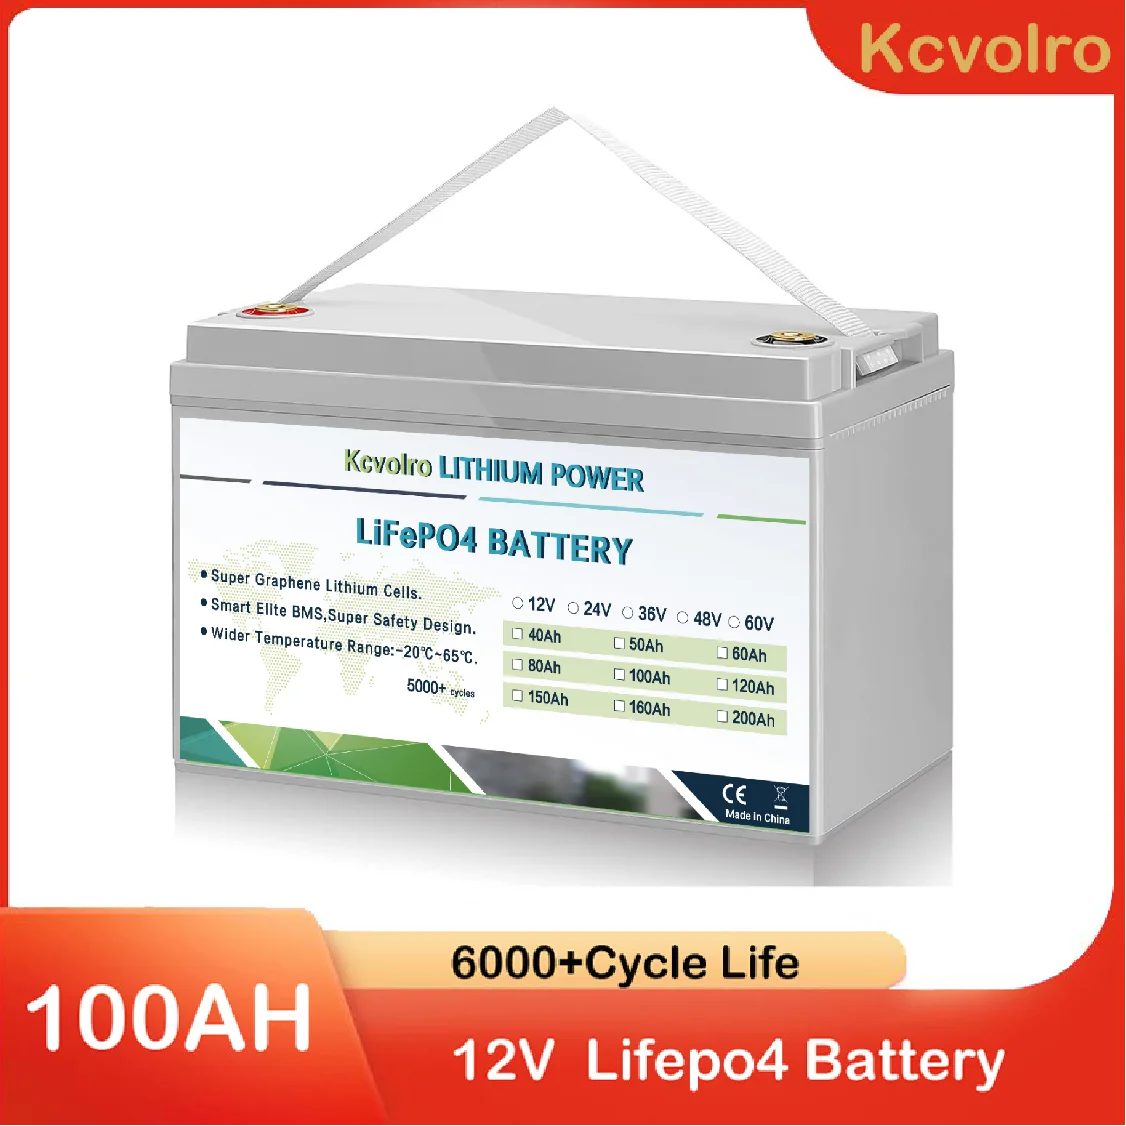 LiFePO4 Akku 24V 100Ah Lithium-Eisen-Phosphat Batterie für Camping Bo